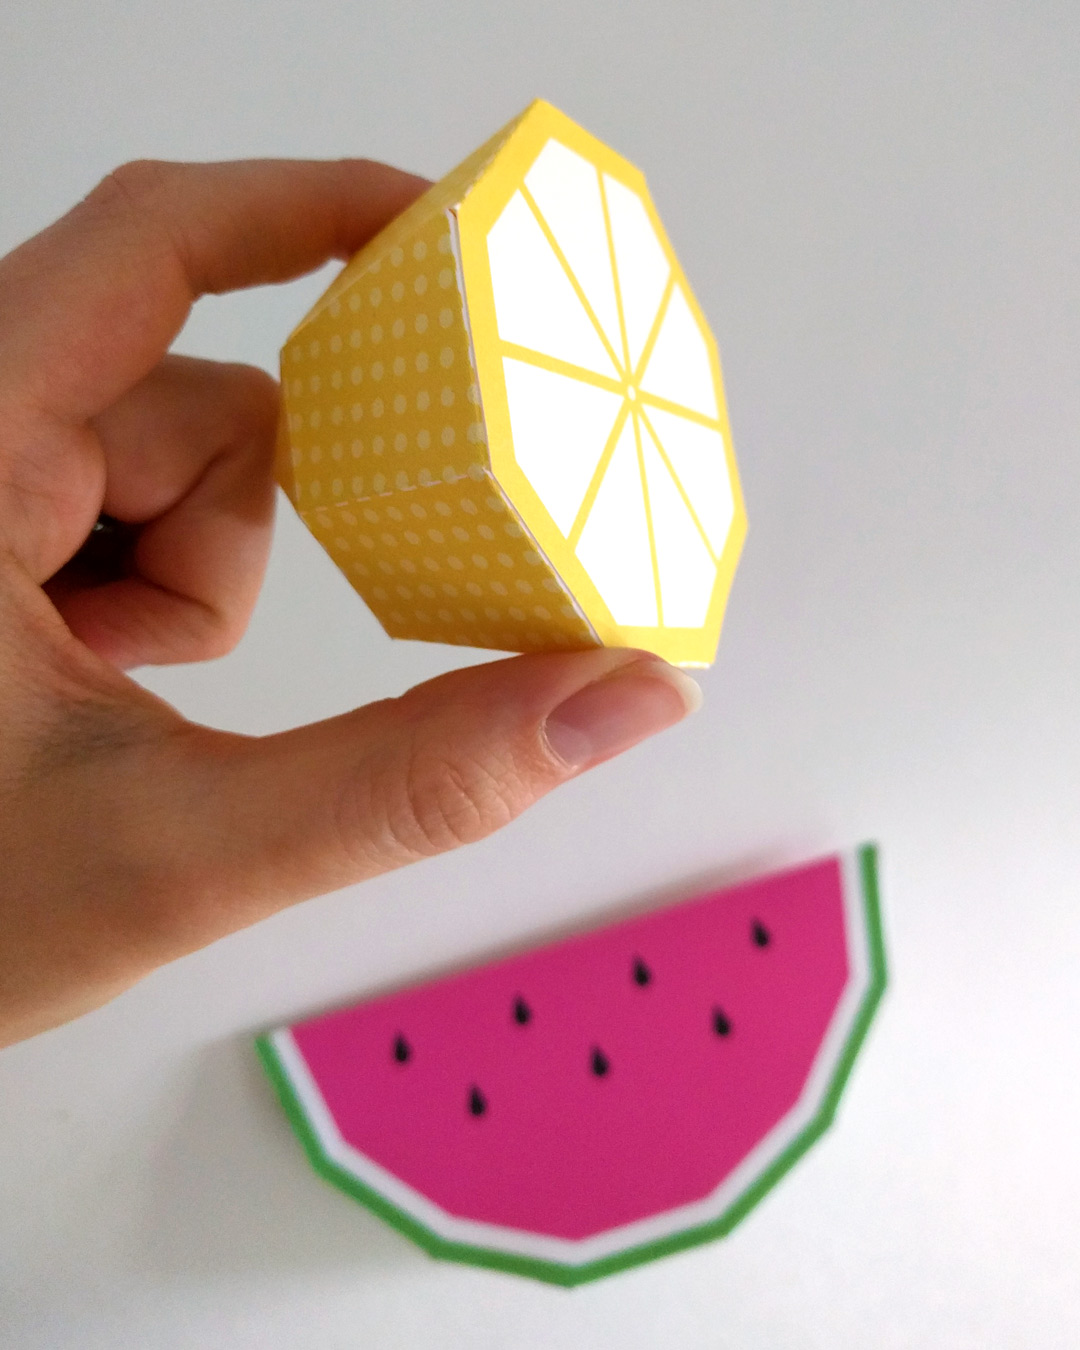 Papercraft lemon and watermelon